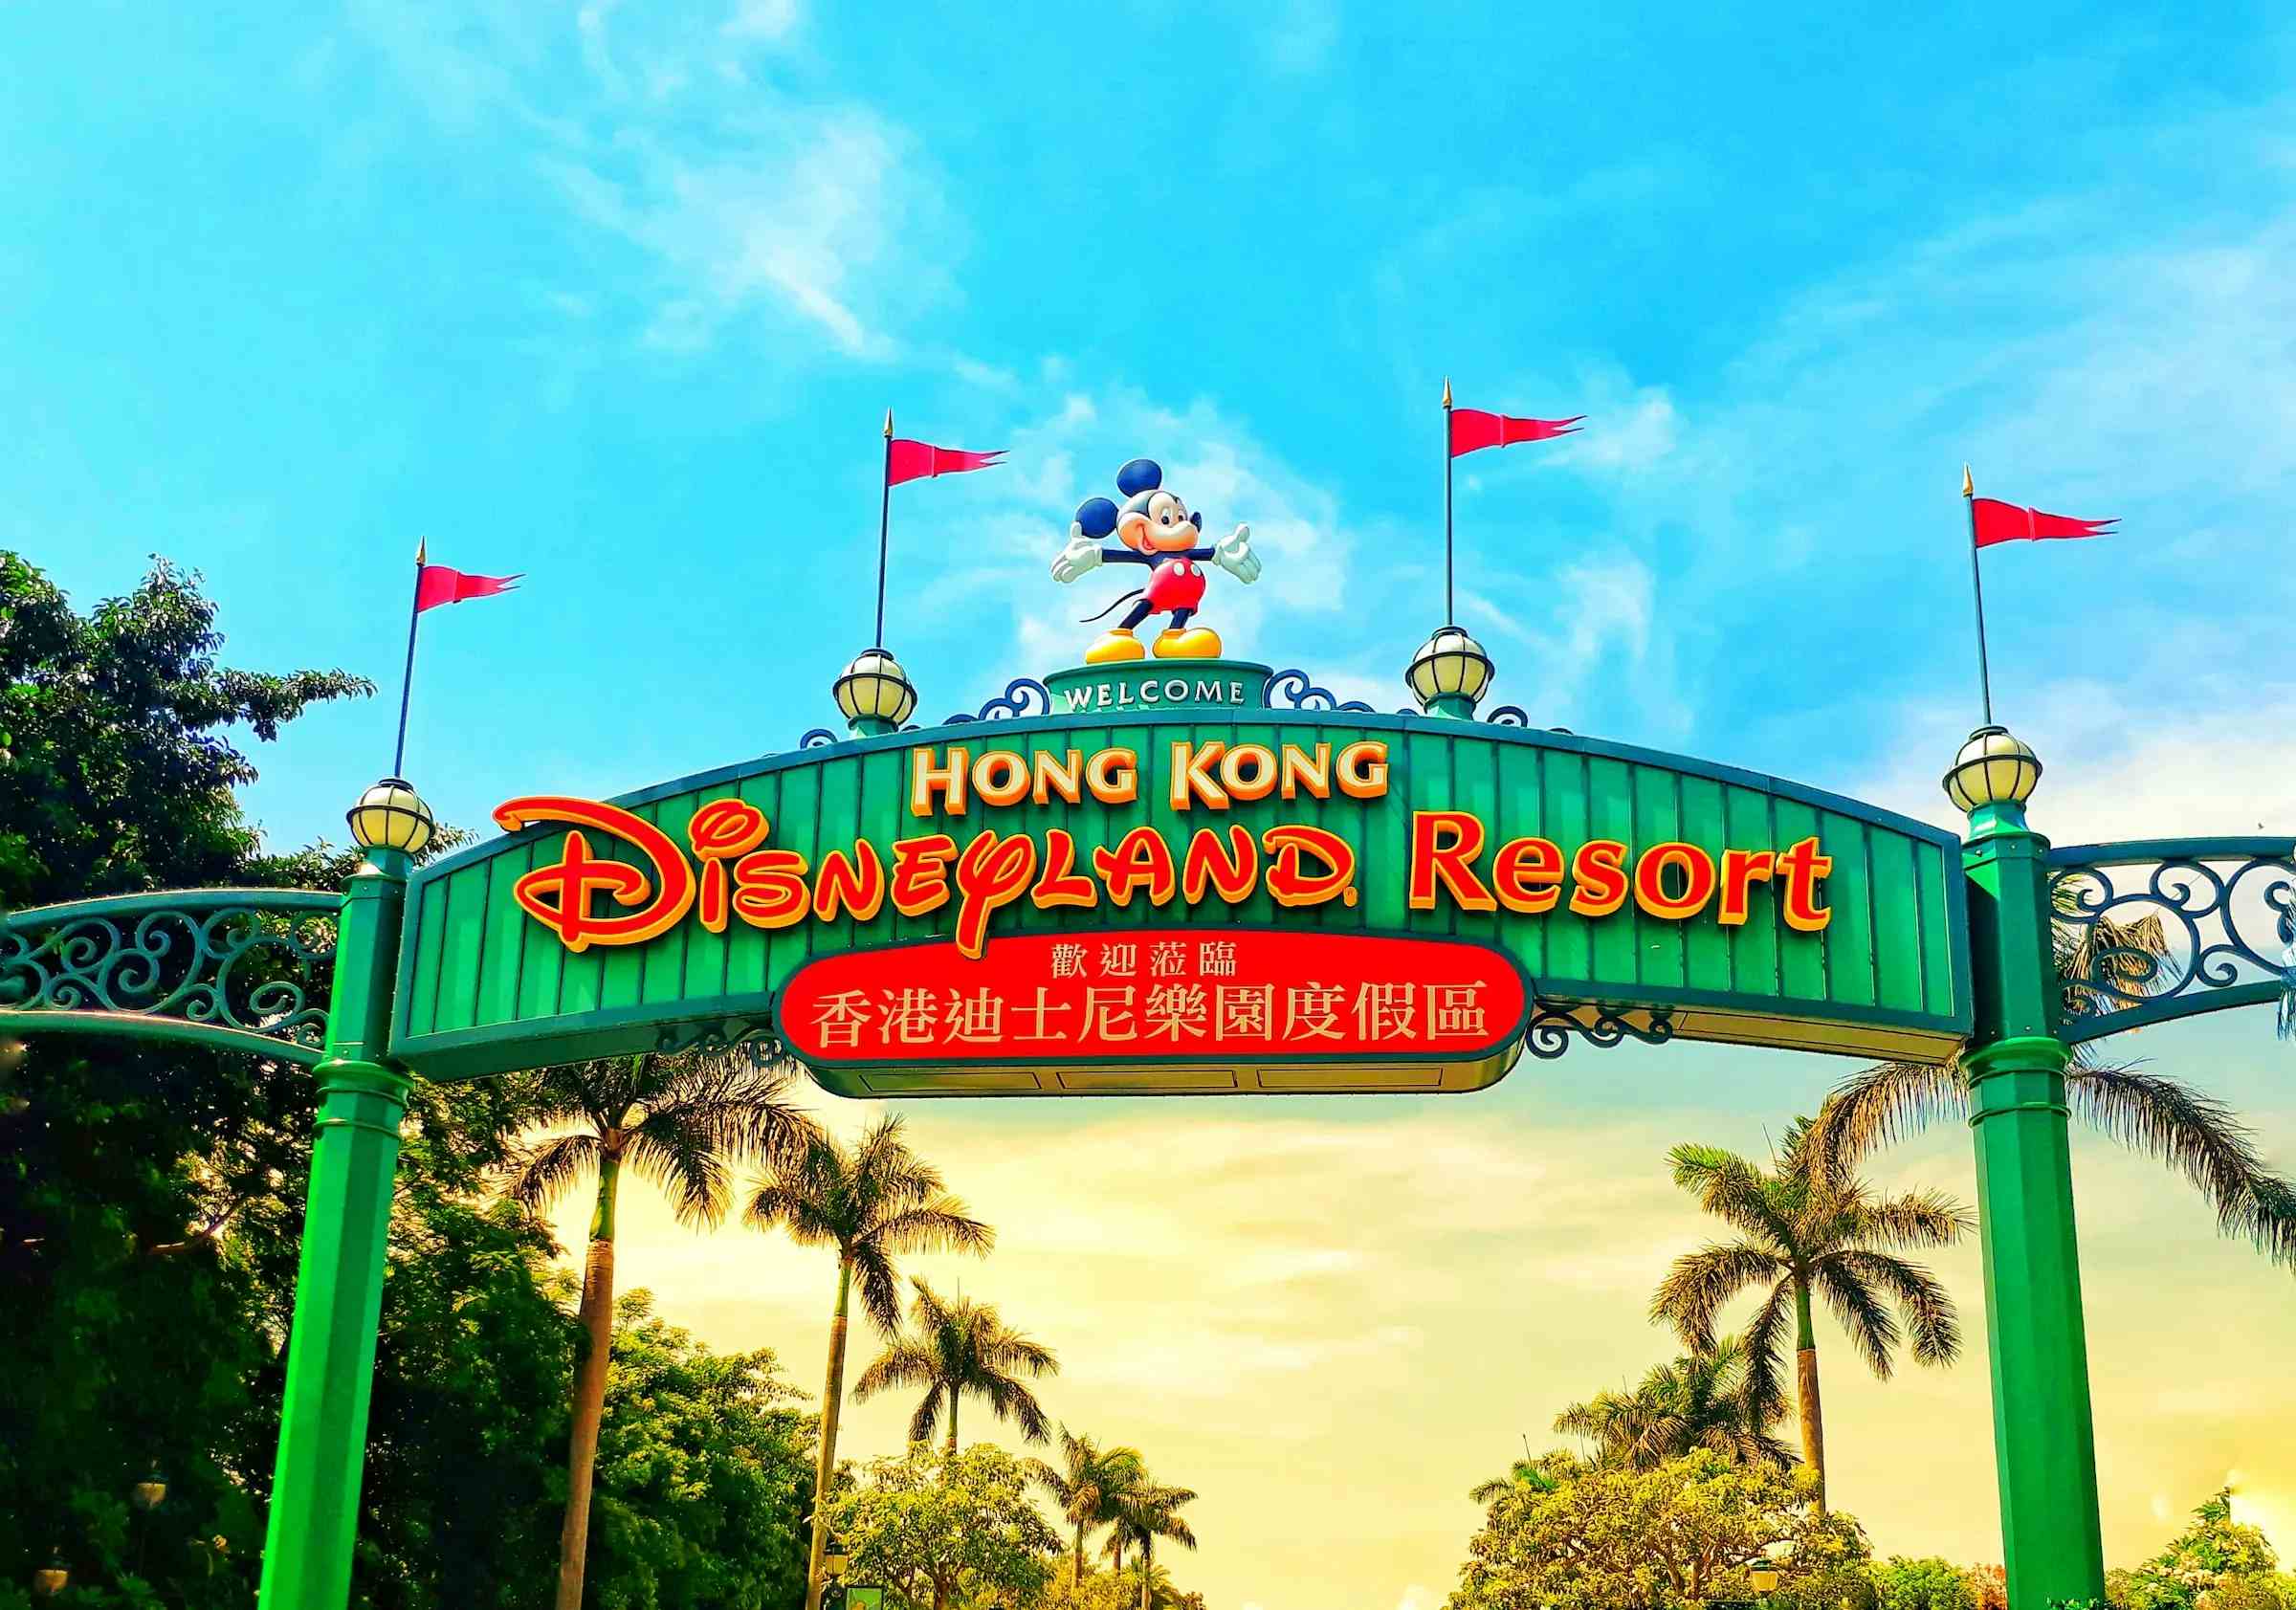 Hong Kong Disneyland image